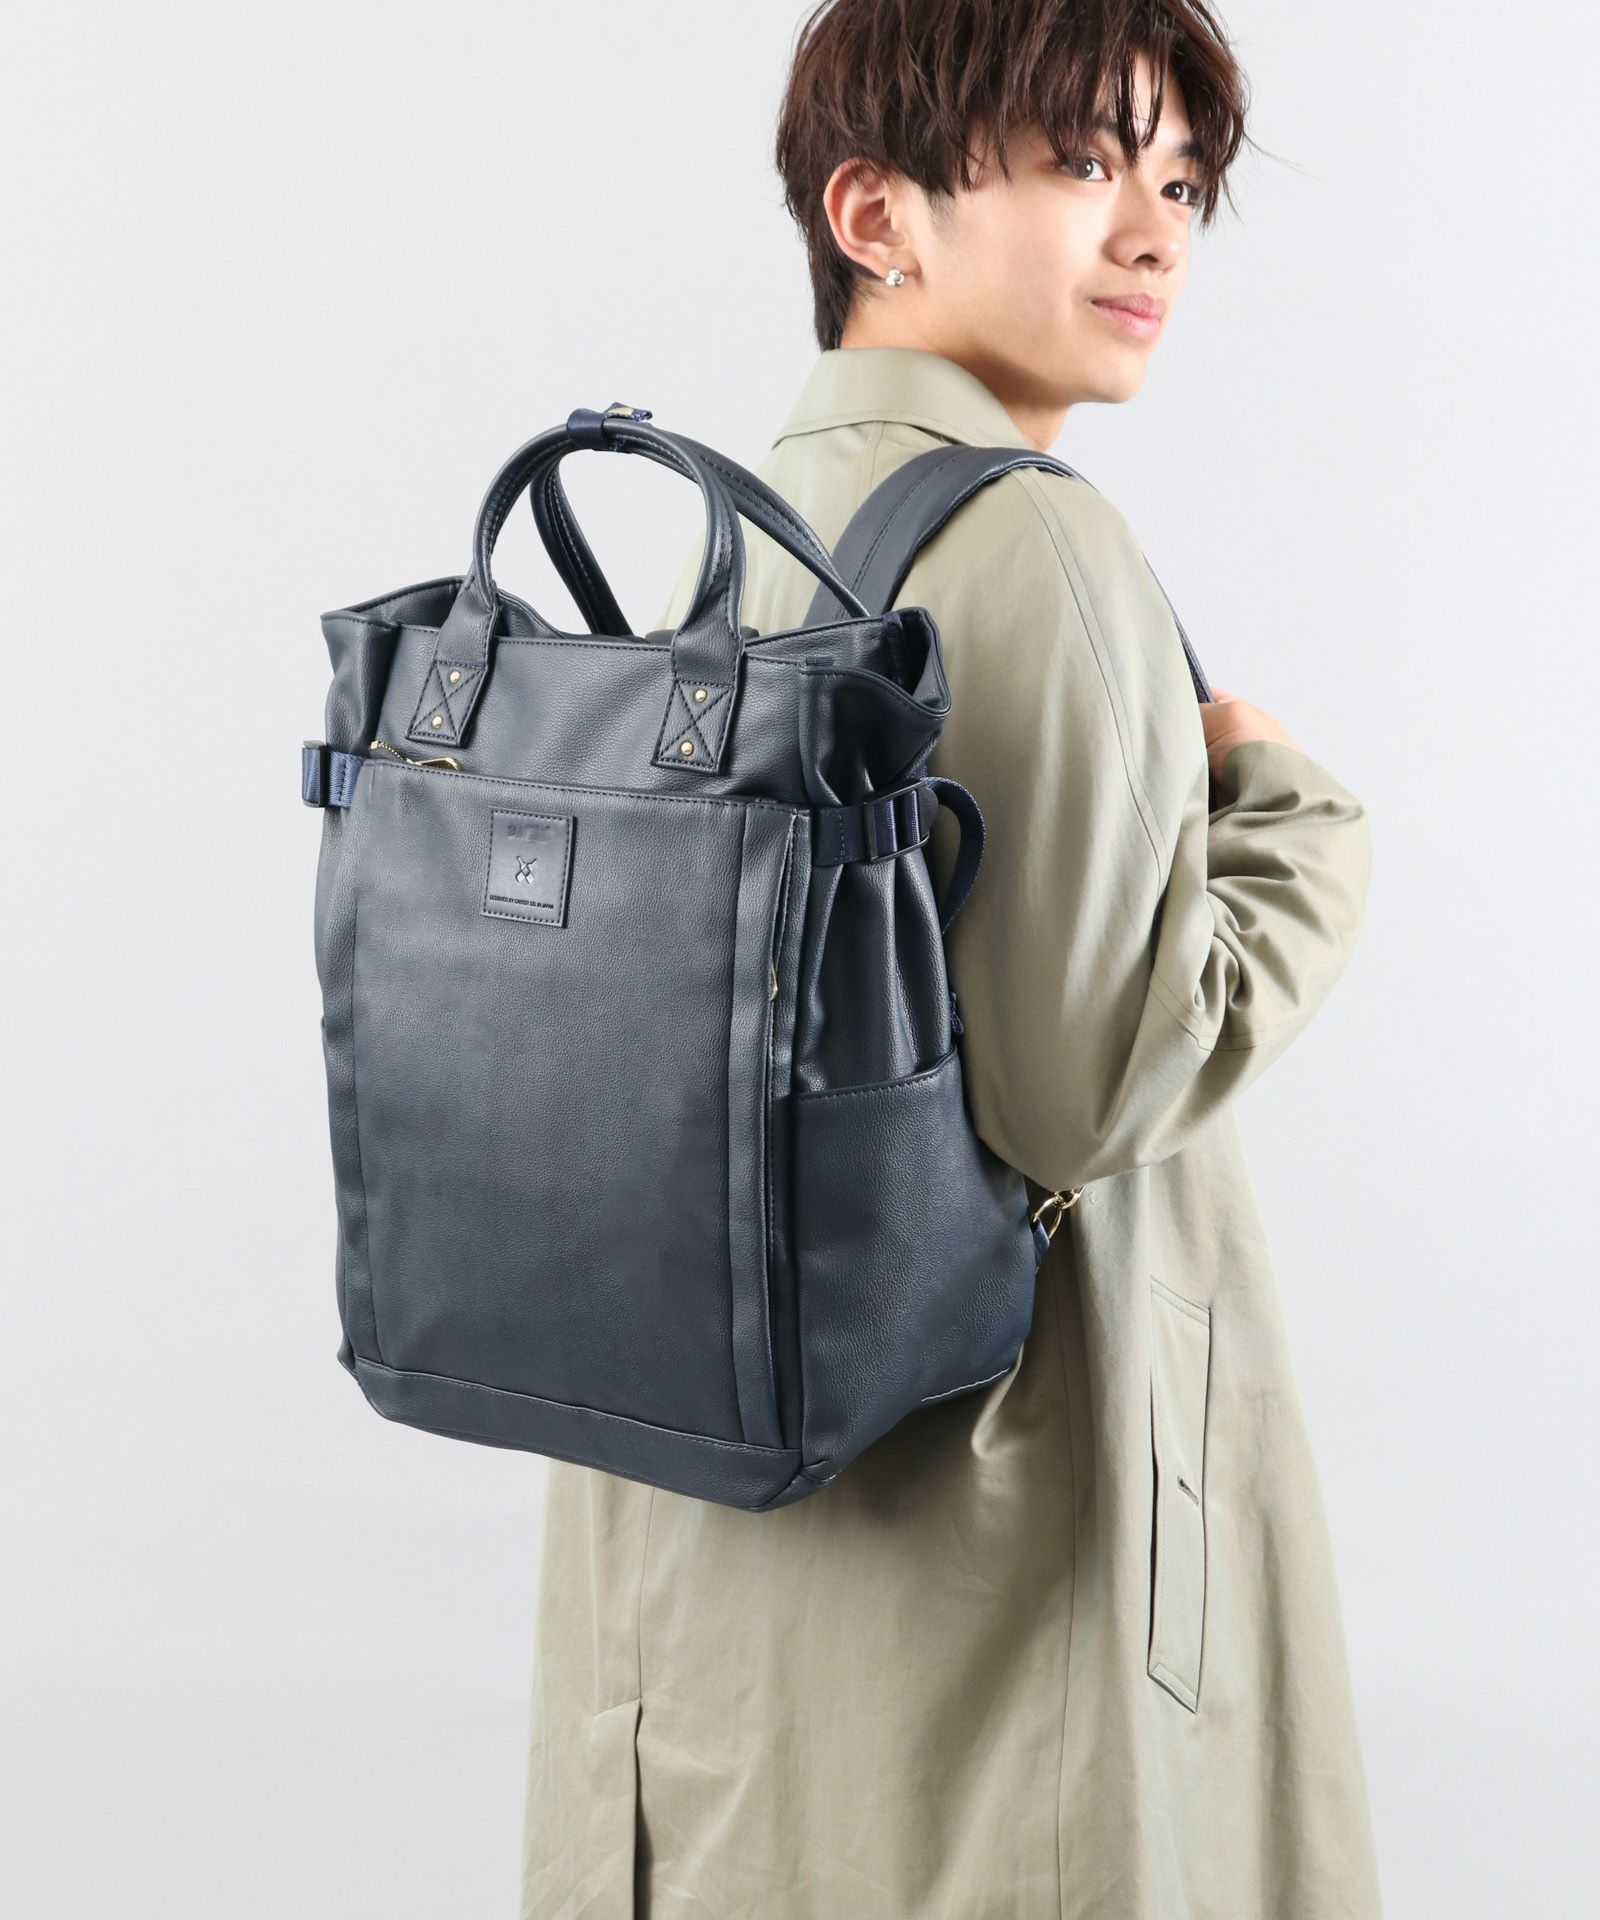 Japan Lotte Backpack PU Leatherwear business affairs computer Men's bag travel knapsack bags Bags handbags backpack